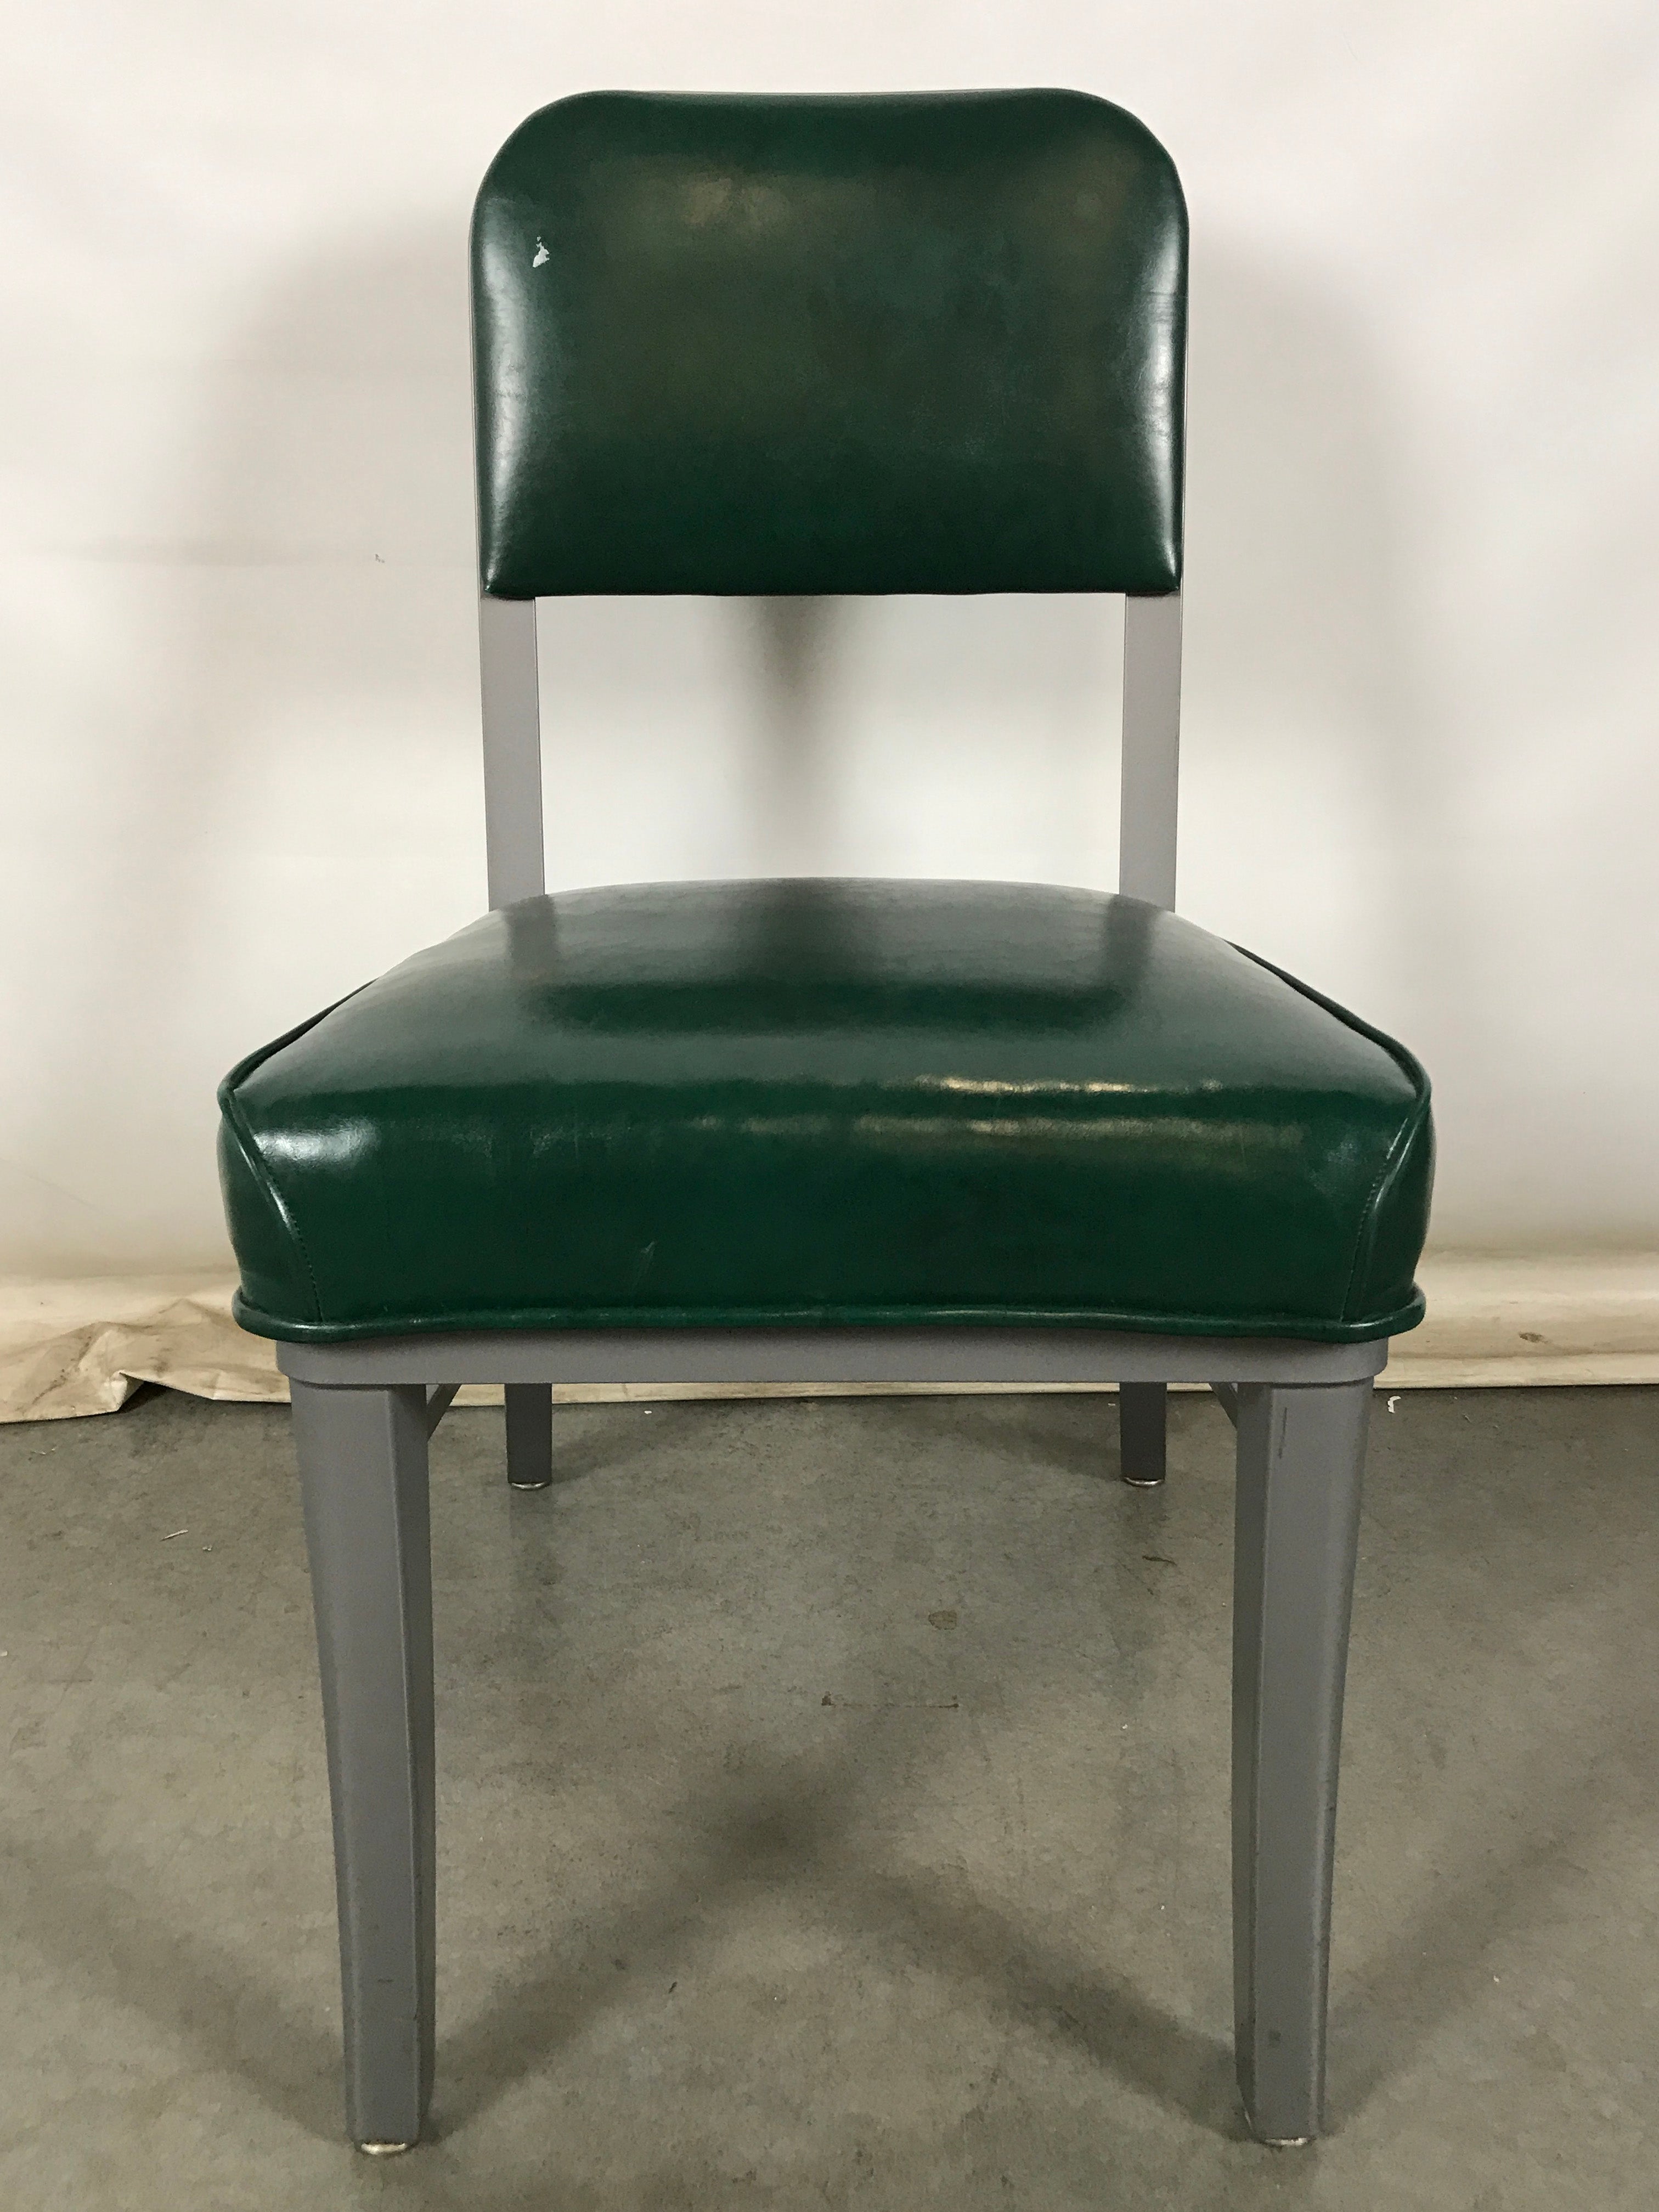 Steelcase Green Armless Chair